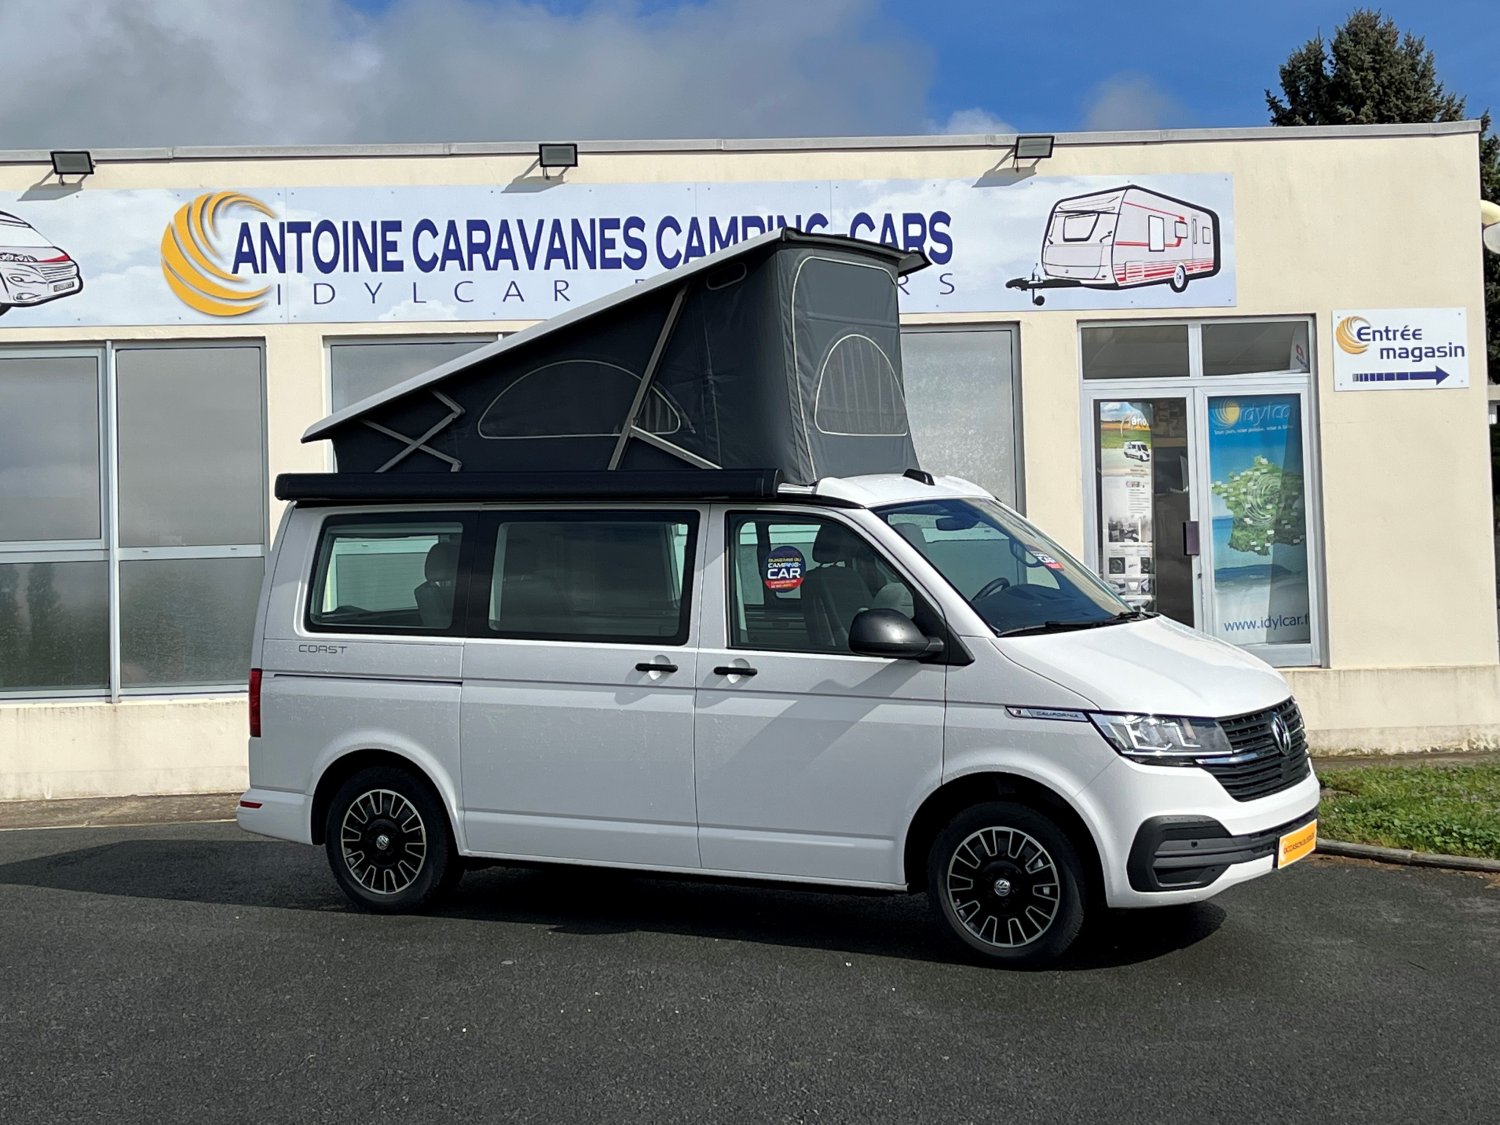 Antoine Caravanes et Camping Car - Volkswagen CALIFORNIA COAST 6.1 à 84 900 €